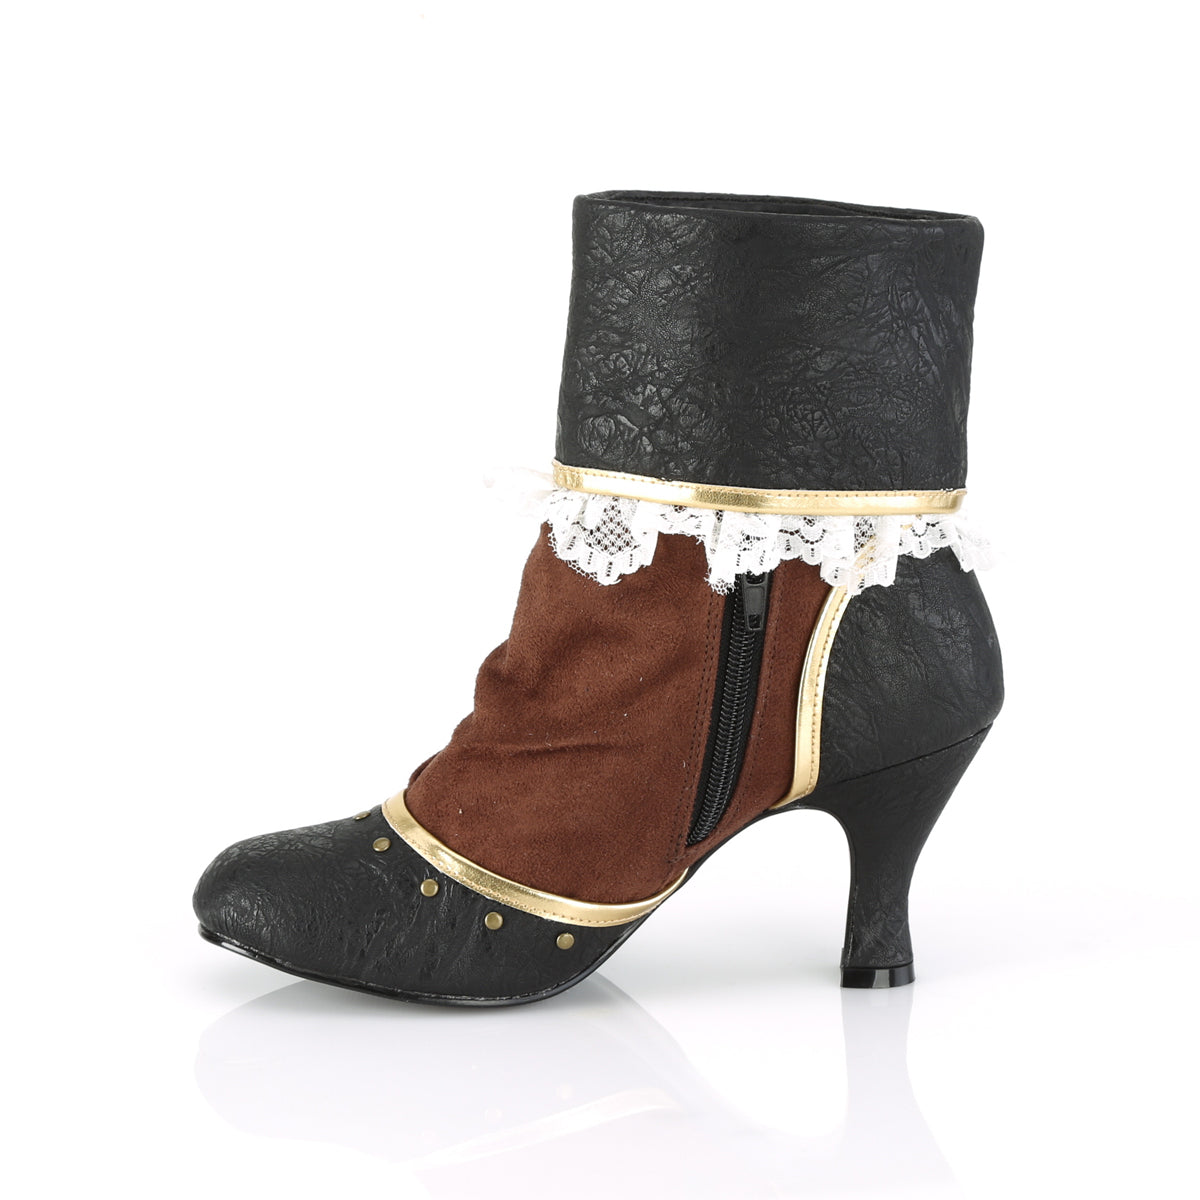 MATEY-115 3 Inch Heel Black Women's Boots Funtasma Costume Shoes 